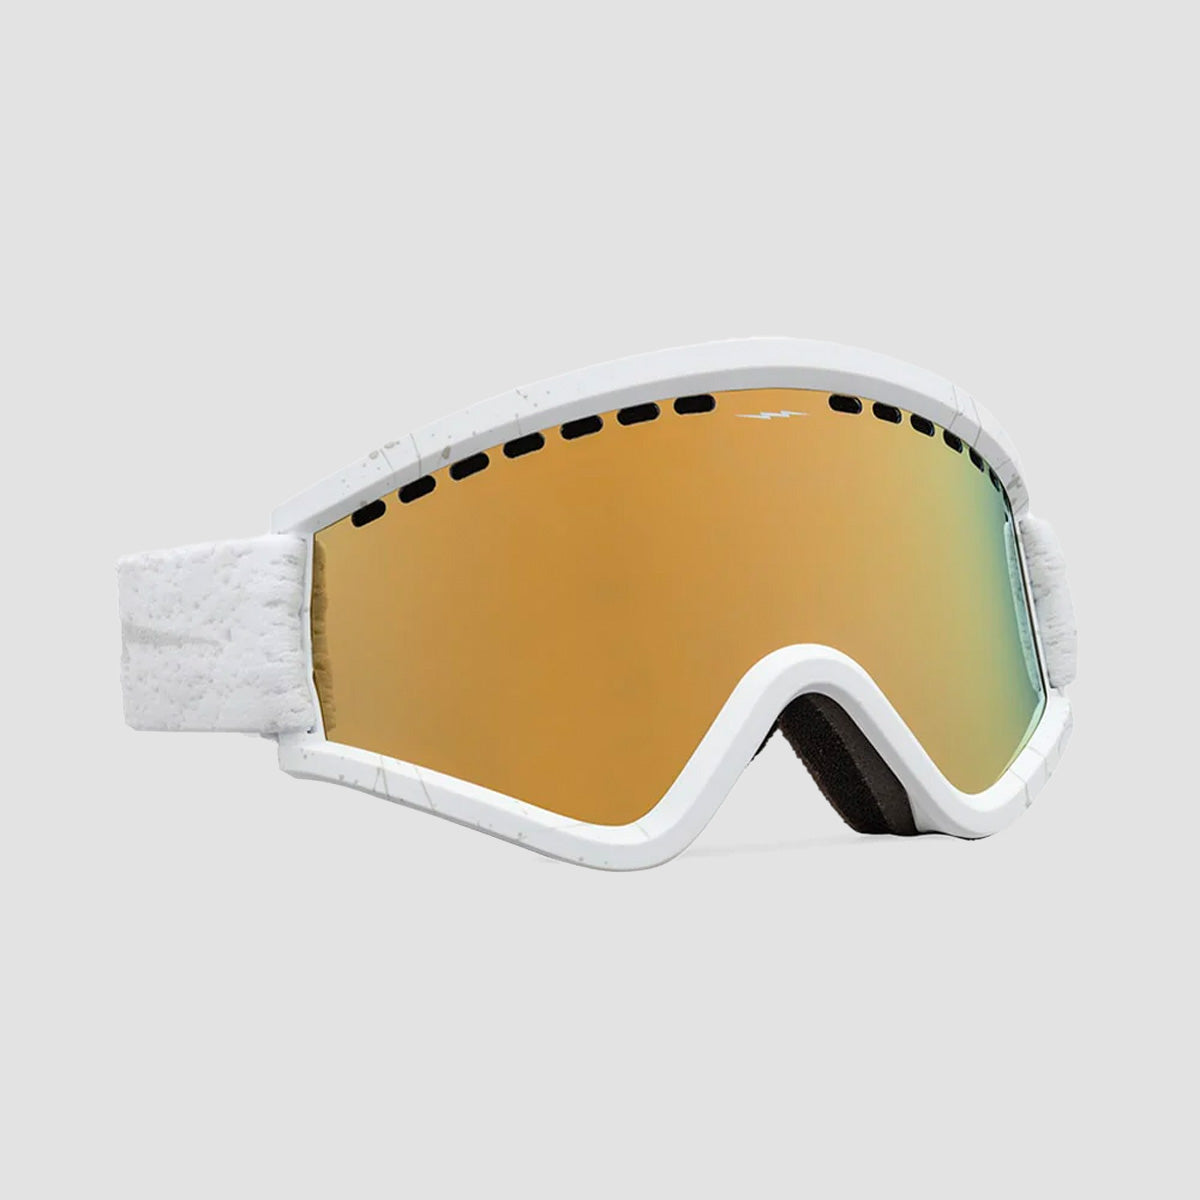 Electric EGV Snow Goggles Matte Speckled White/Gold Chrome